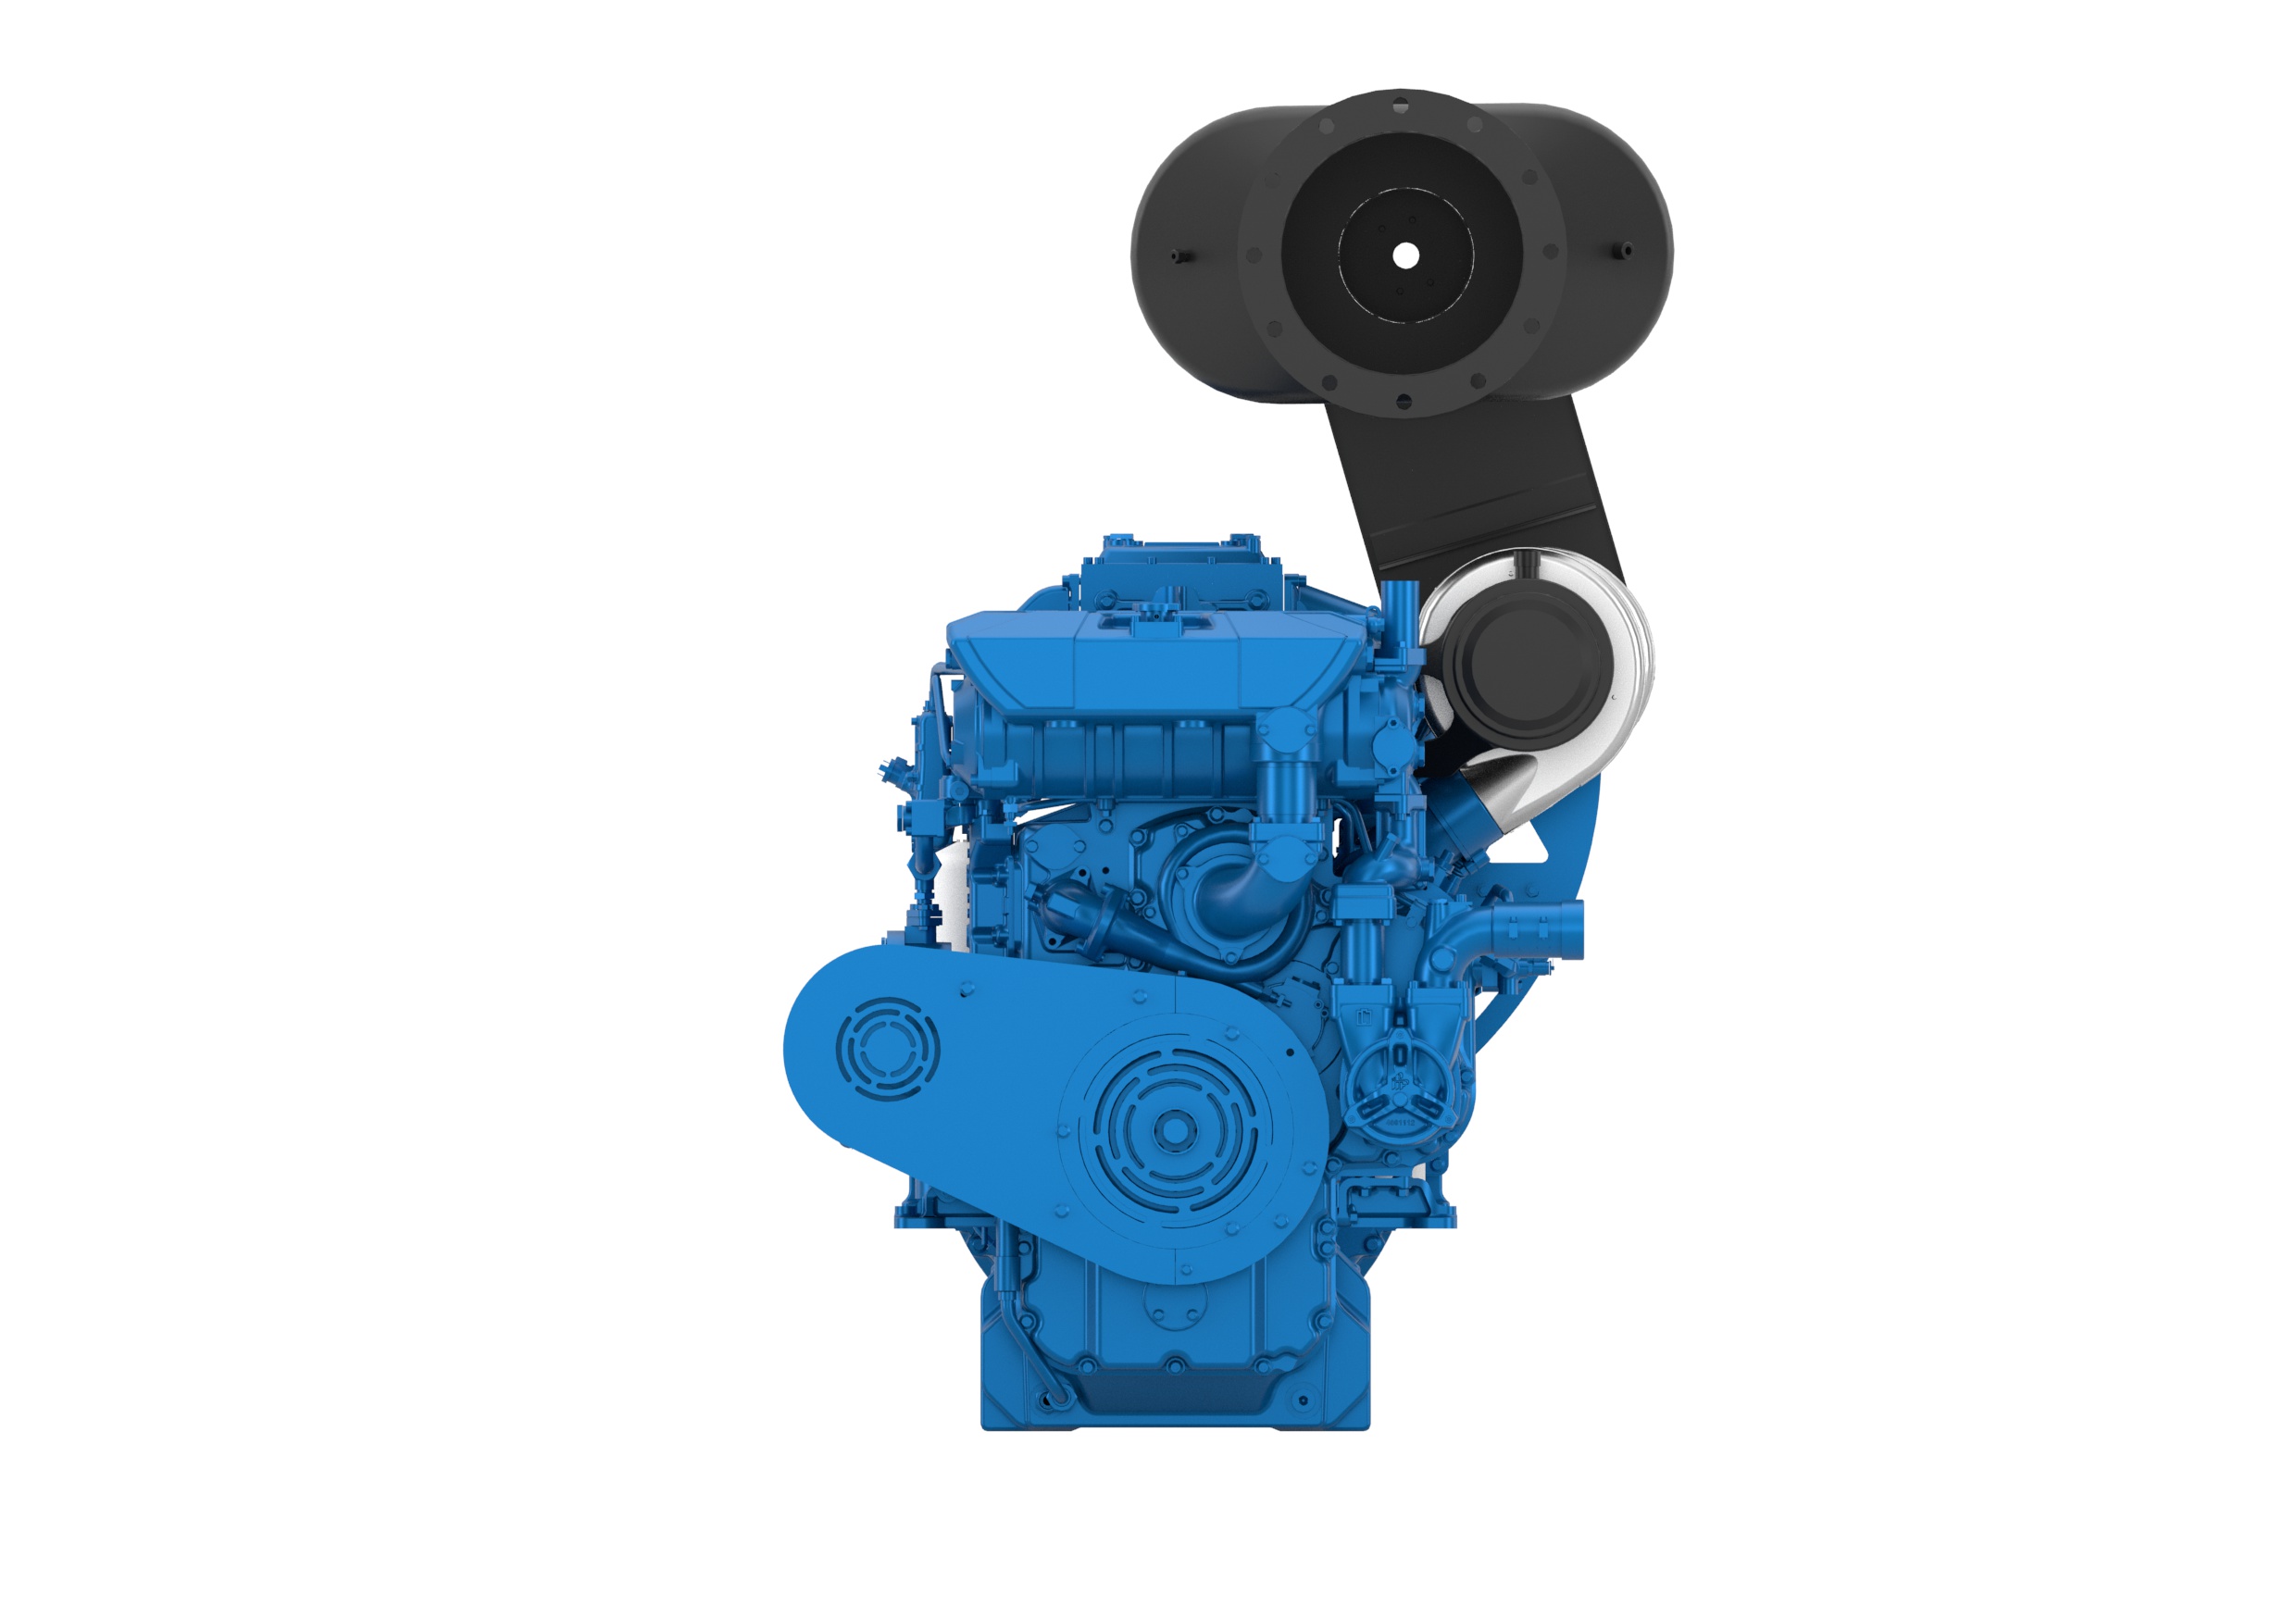 Moteurs Baudouin Marine Propulsion engine 6M26.3 SCR